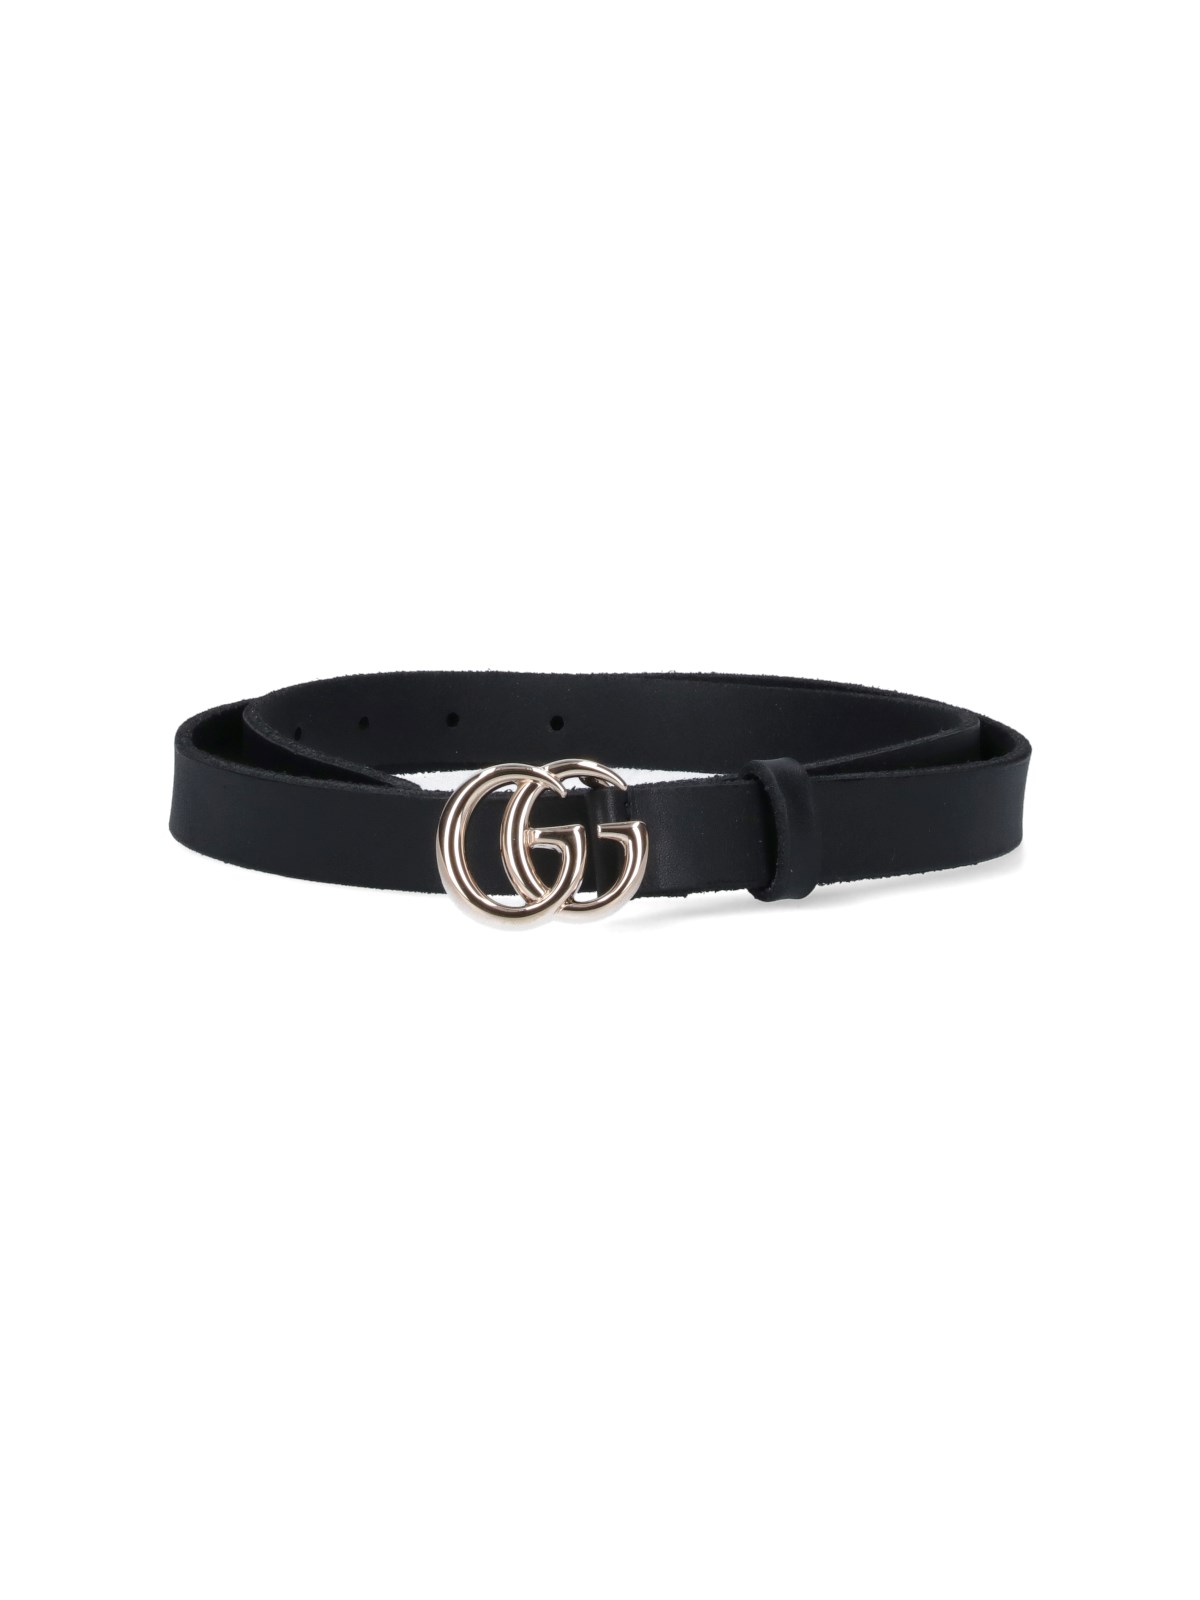 Gucci Thin Belt In Black